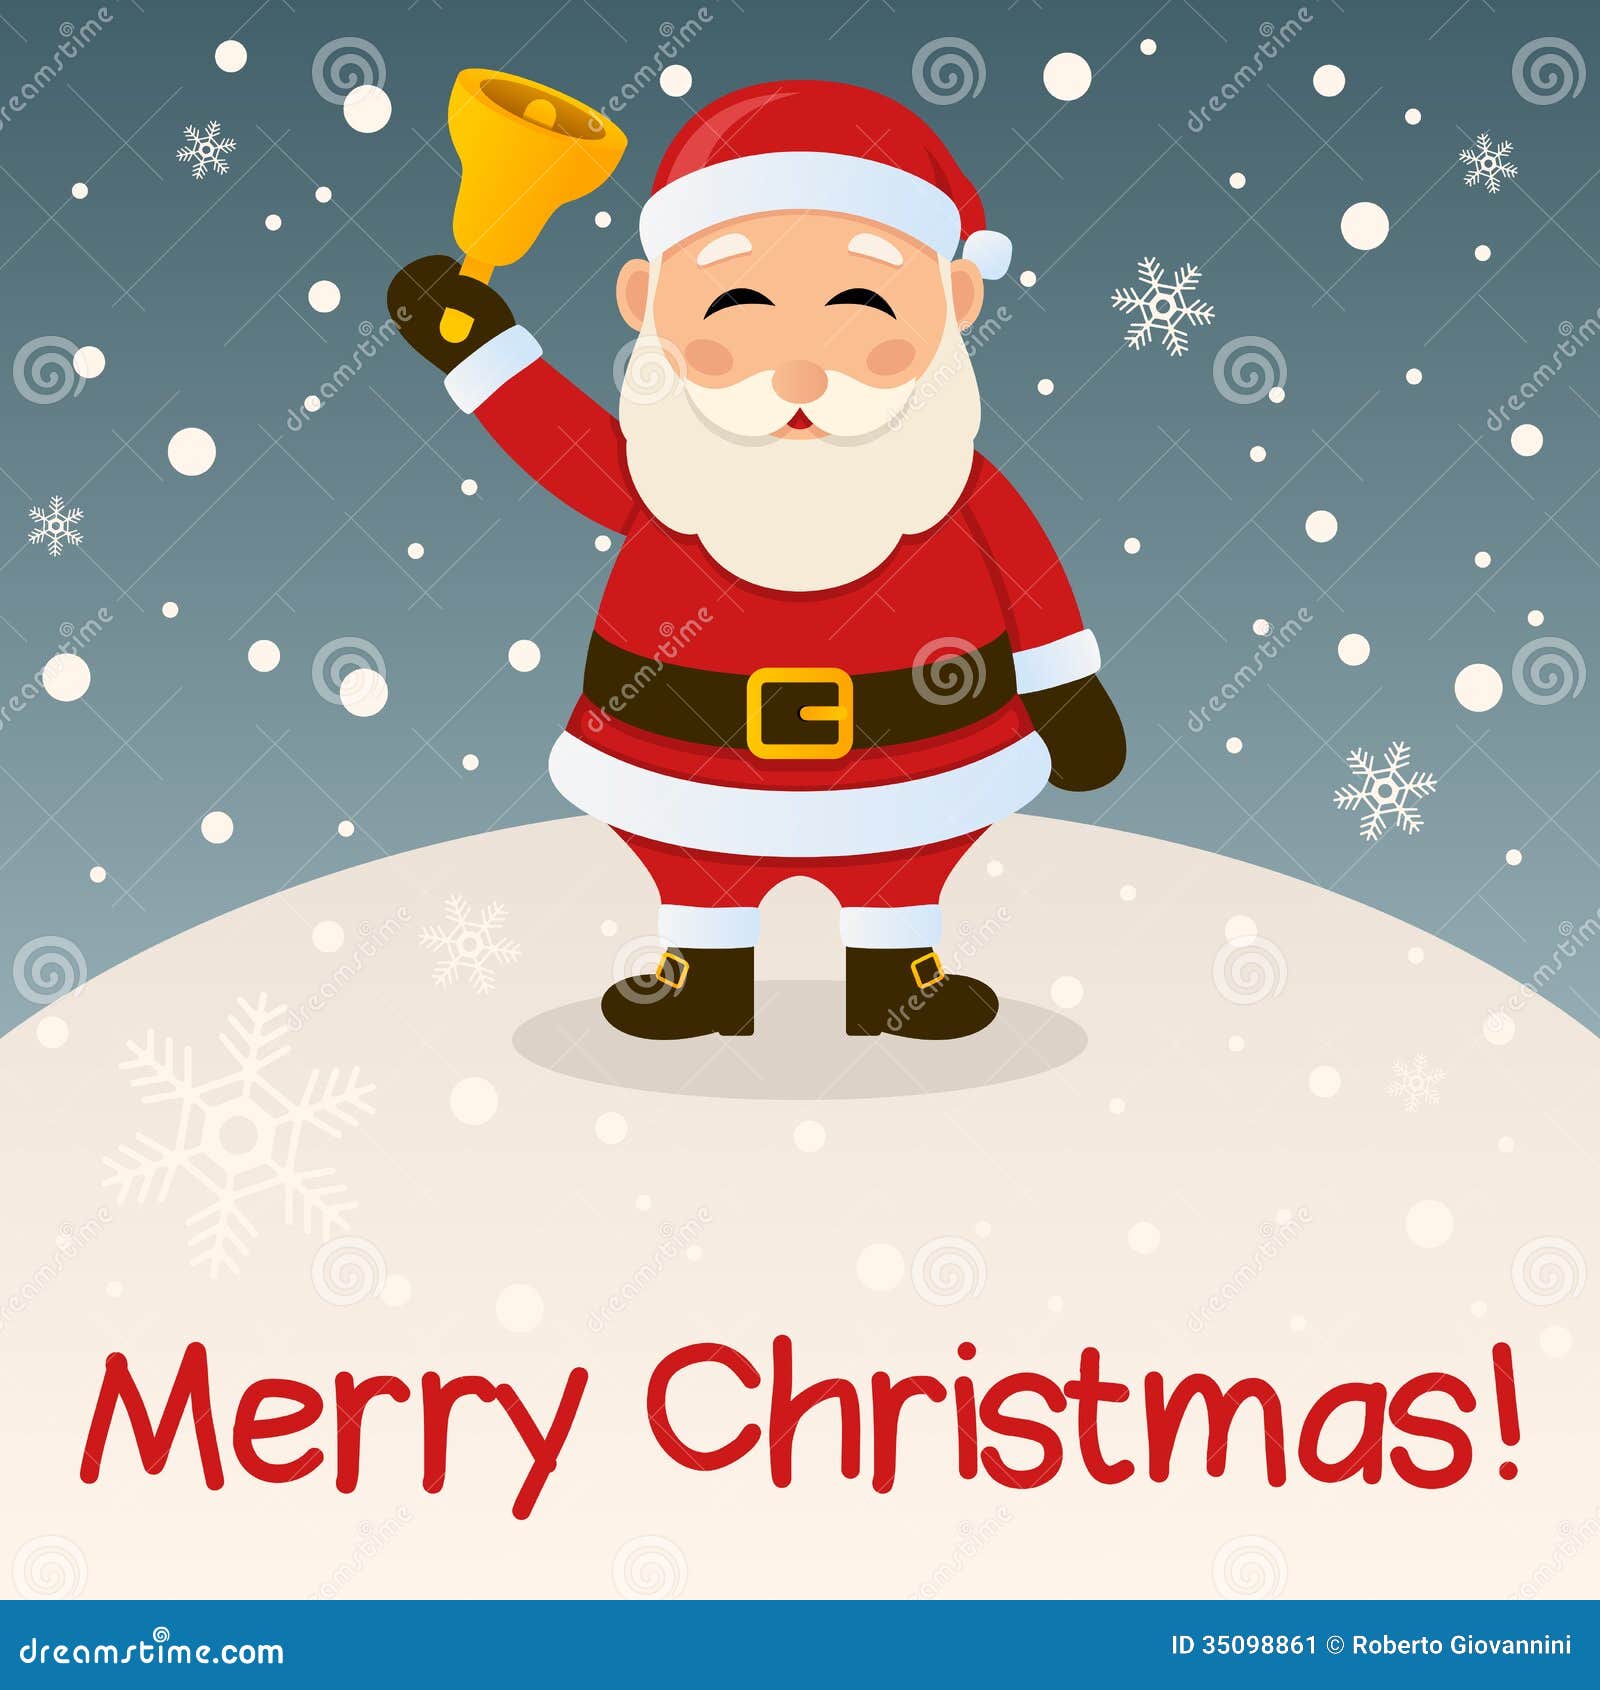 Santa Claus Merry Christmas Card Royalty Free